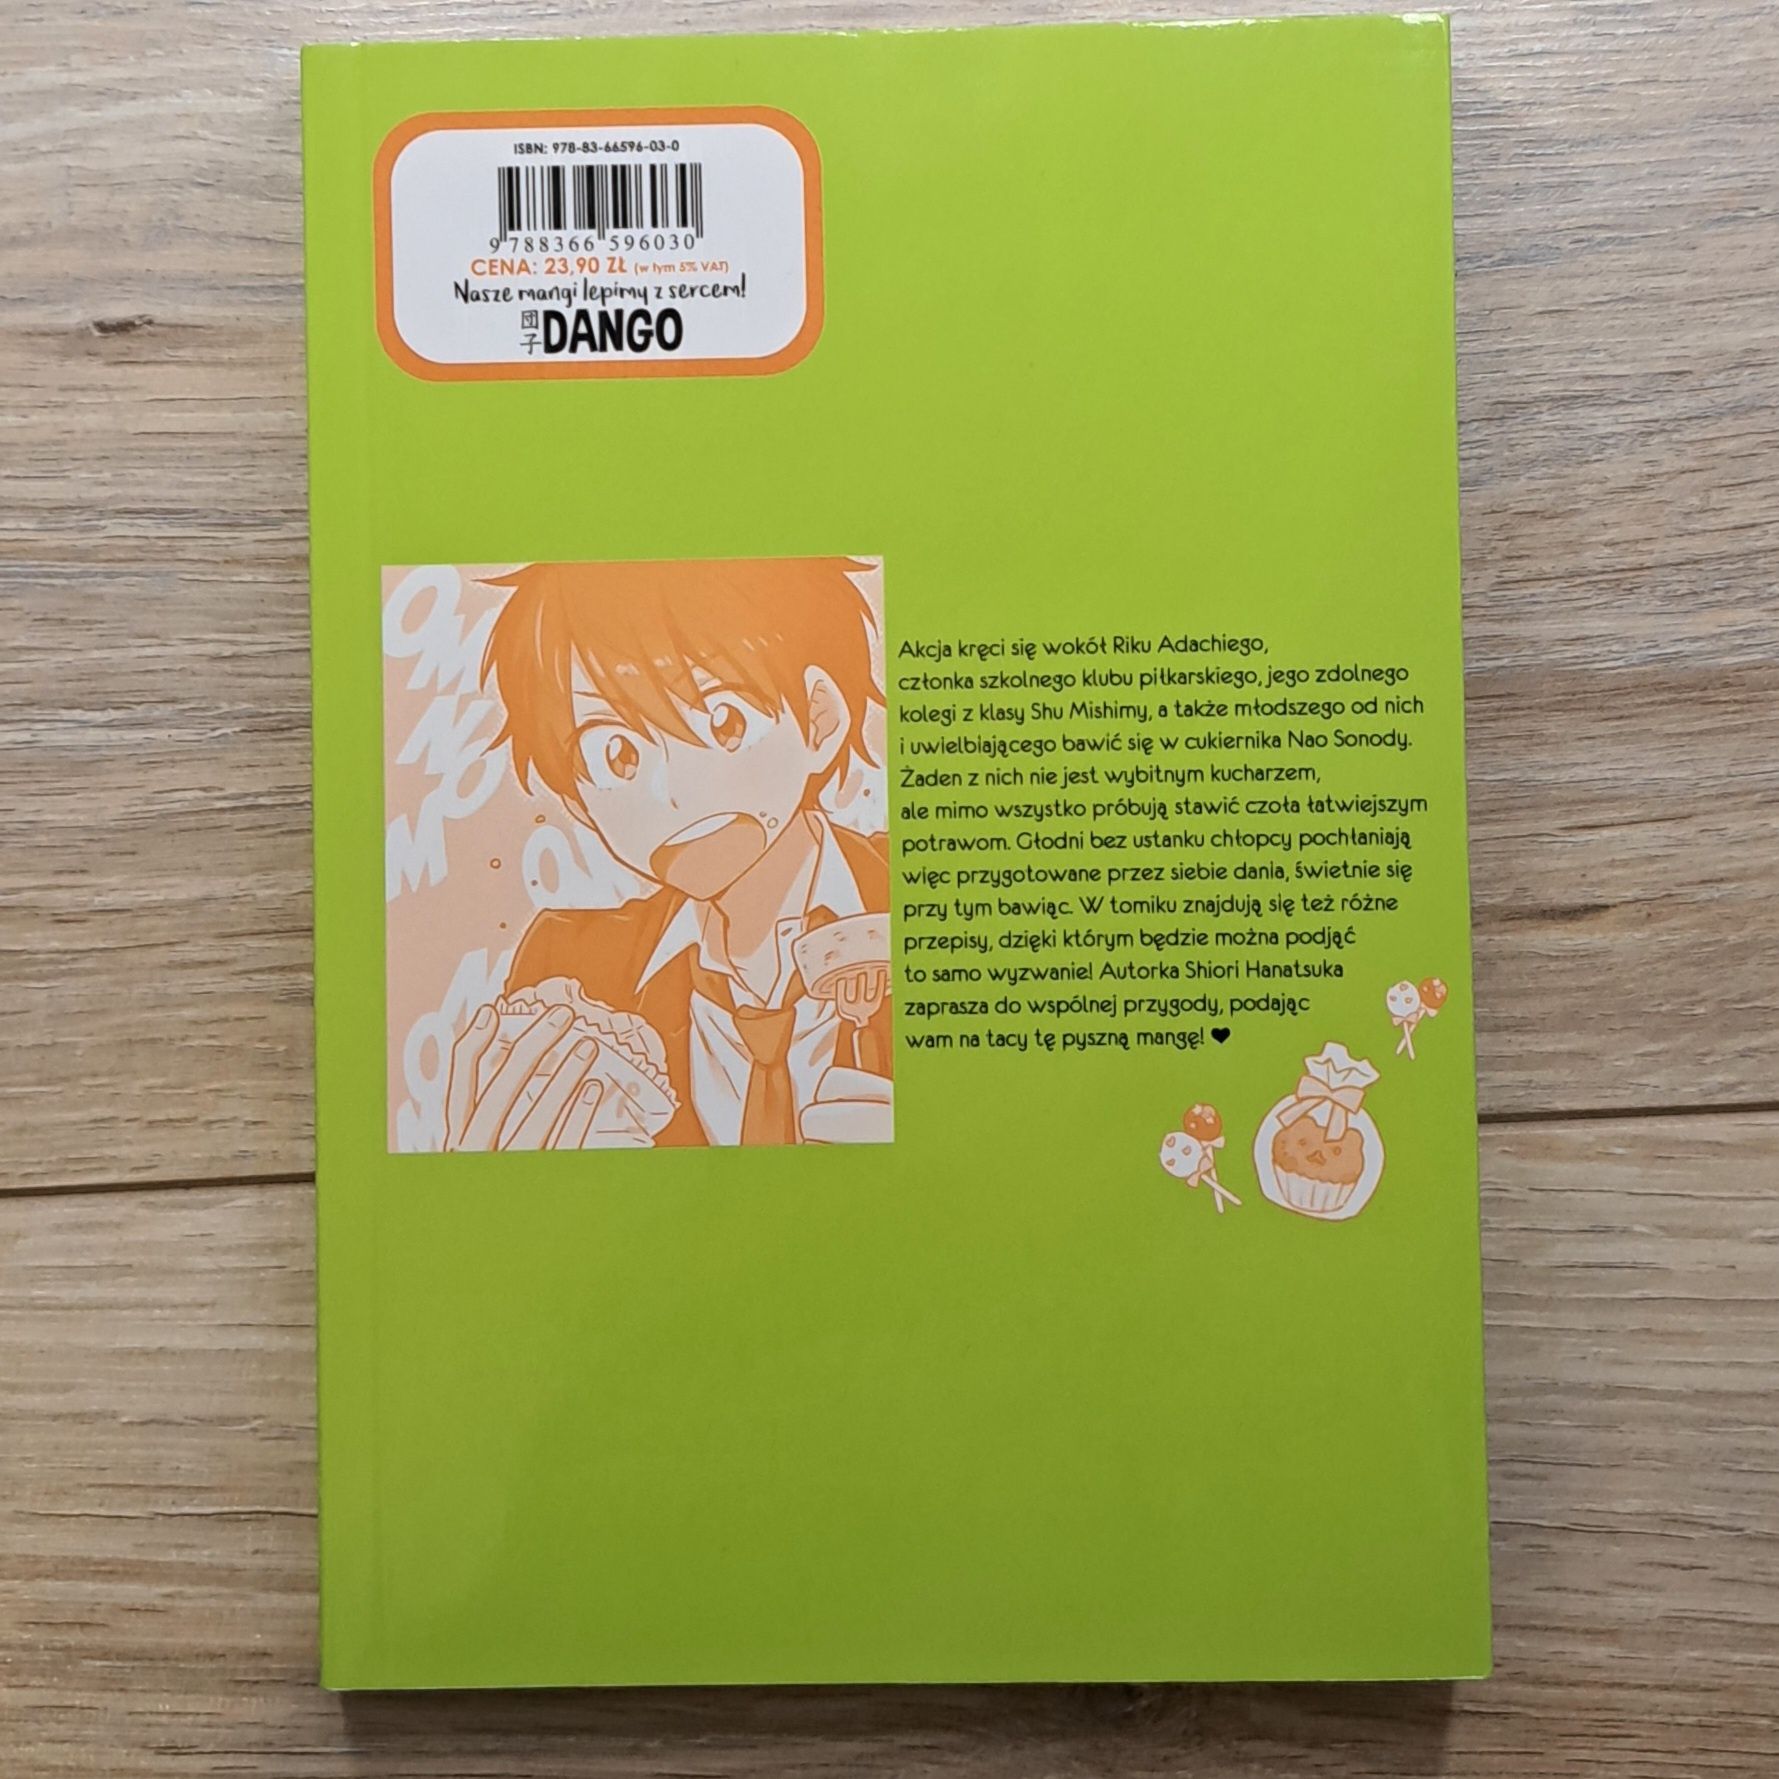 Manga "Głodni bez ustanku" - Shiori Hanatsuka